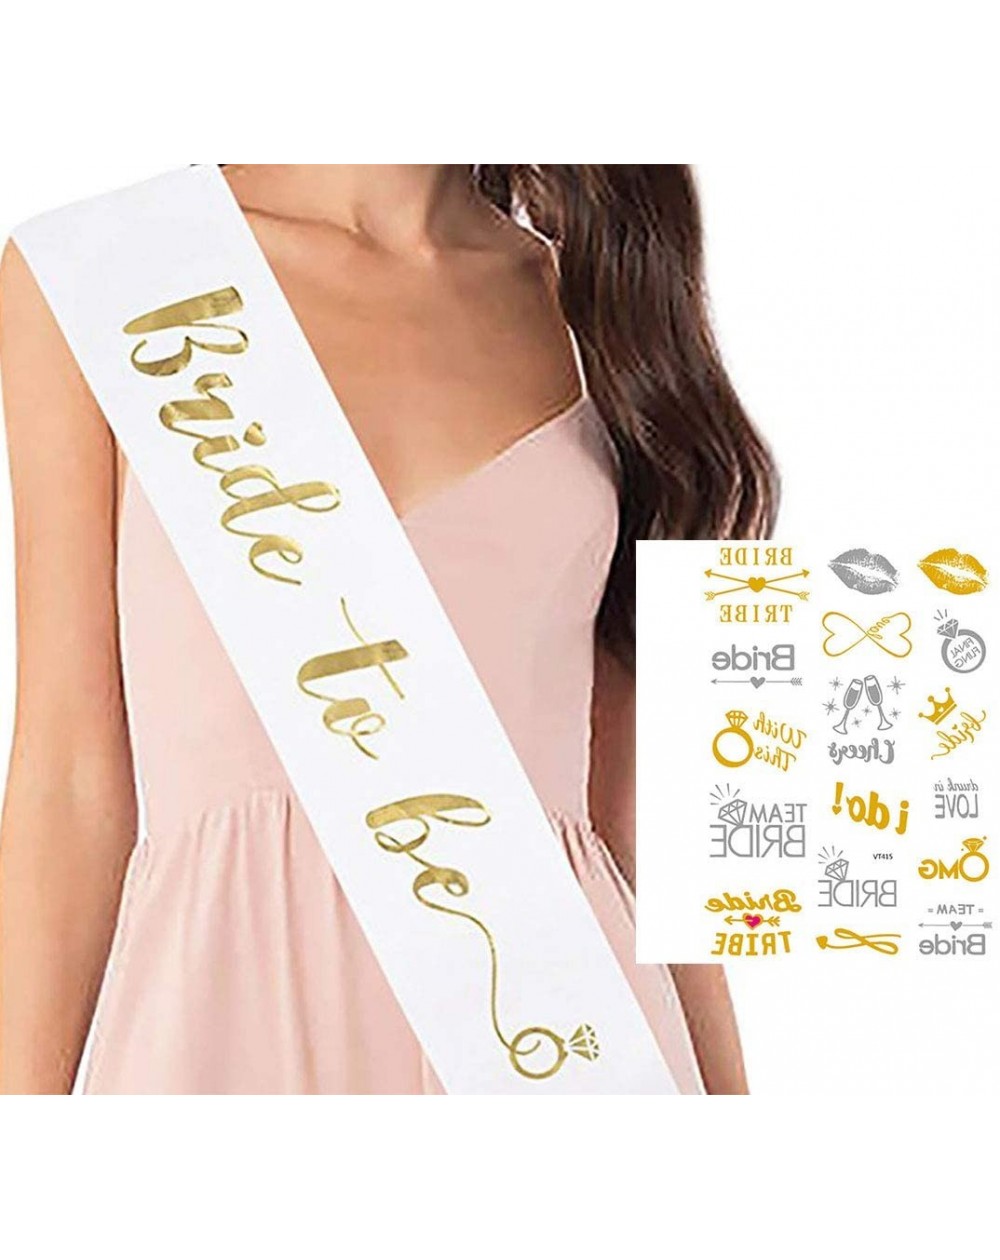 Favors Bachelorette Party Bride Veil Kit -Boho Flower Crown Tiara with Bridal Shower Veil- Bride to Be Sash- Golden Flash Bri...